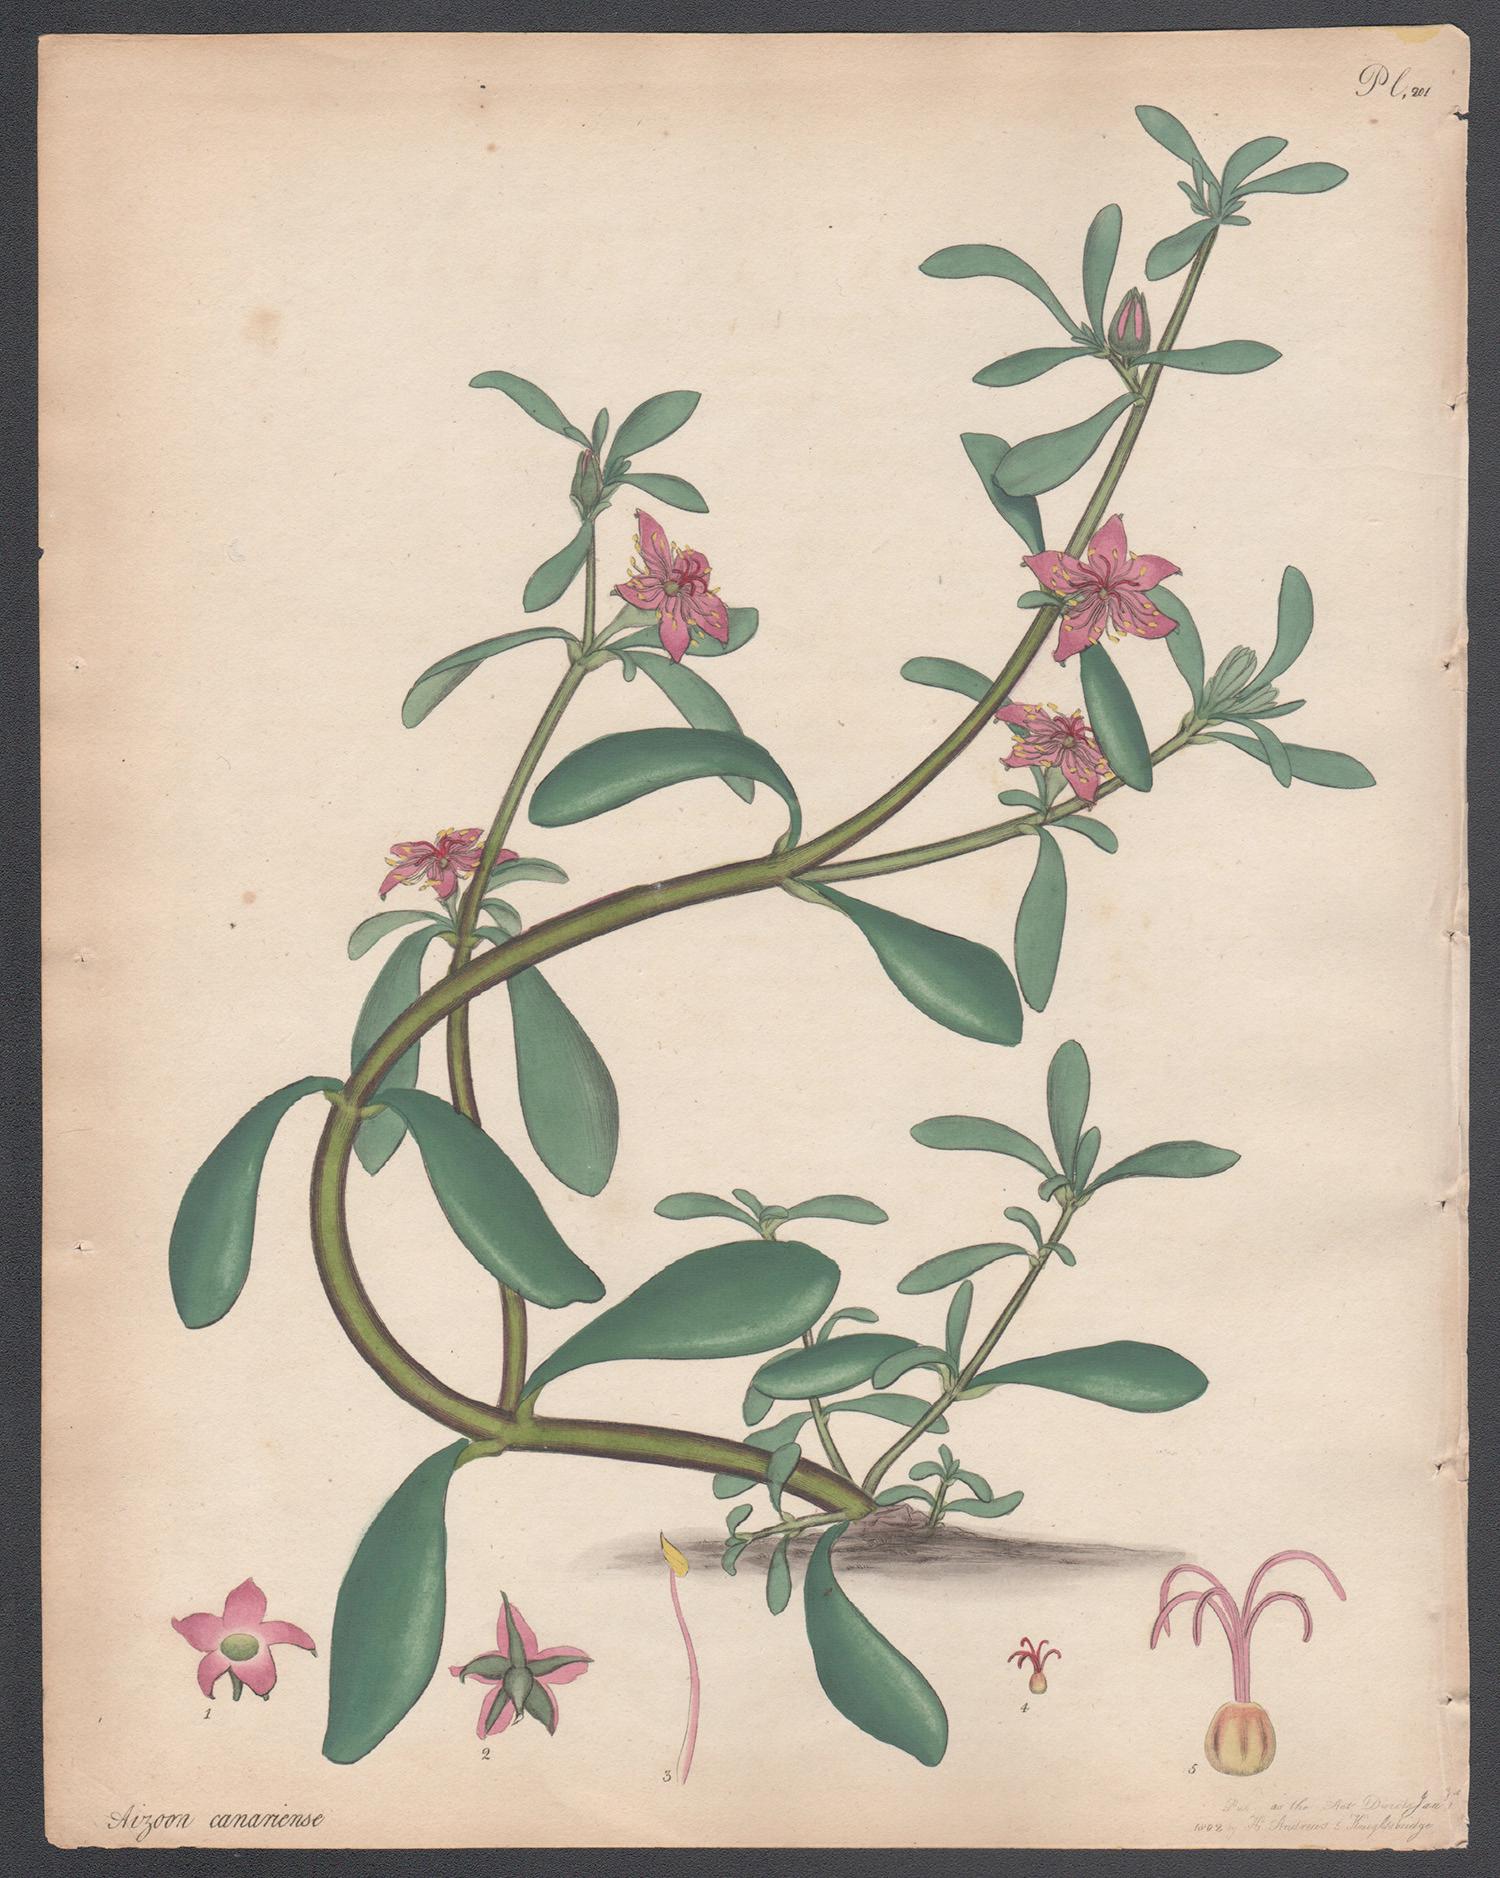 Henry C Andrews Print - Purslane-leaved Aizoon. Henry Andrews antique botanical flower engraving print